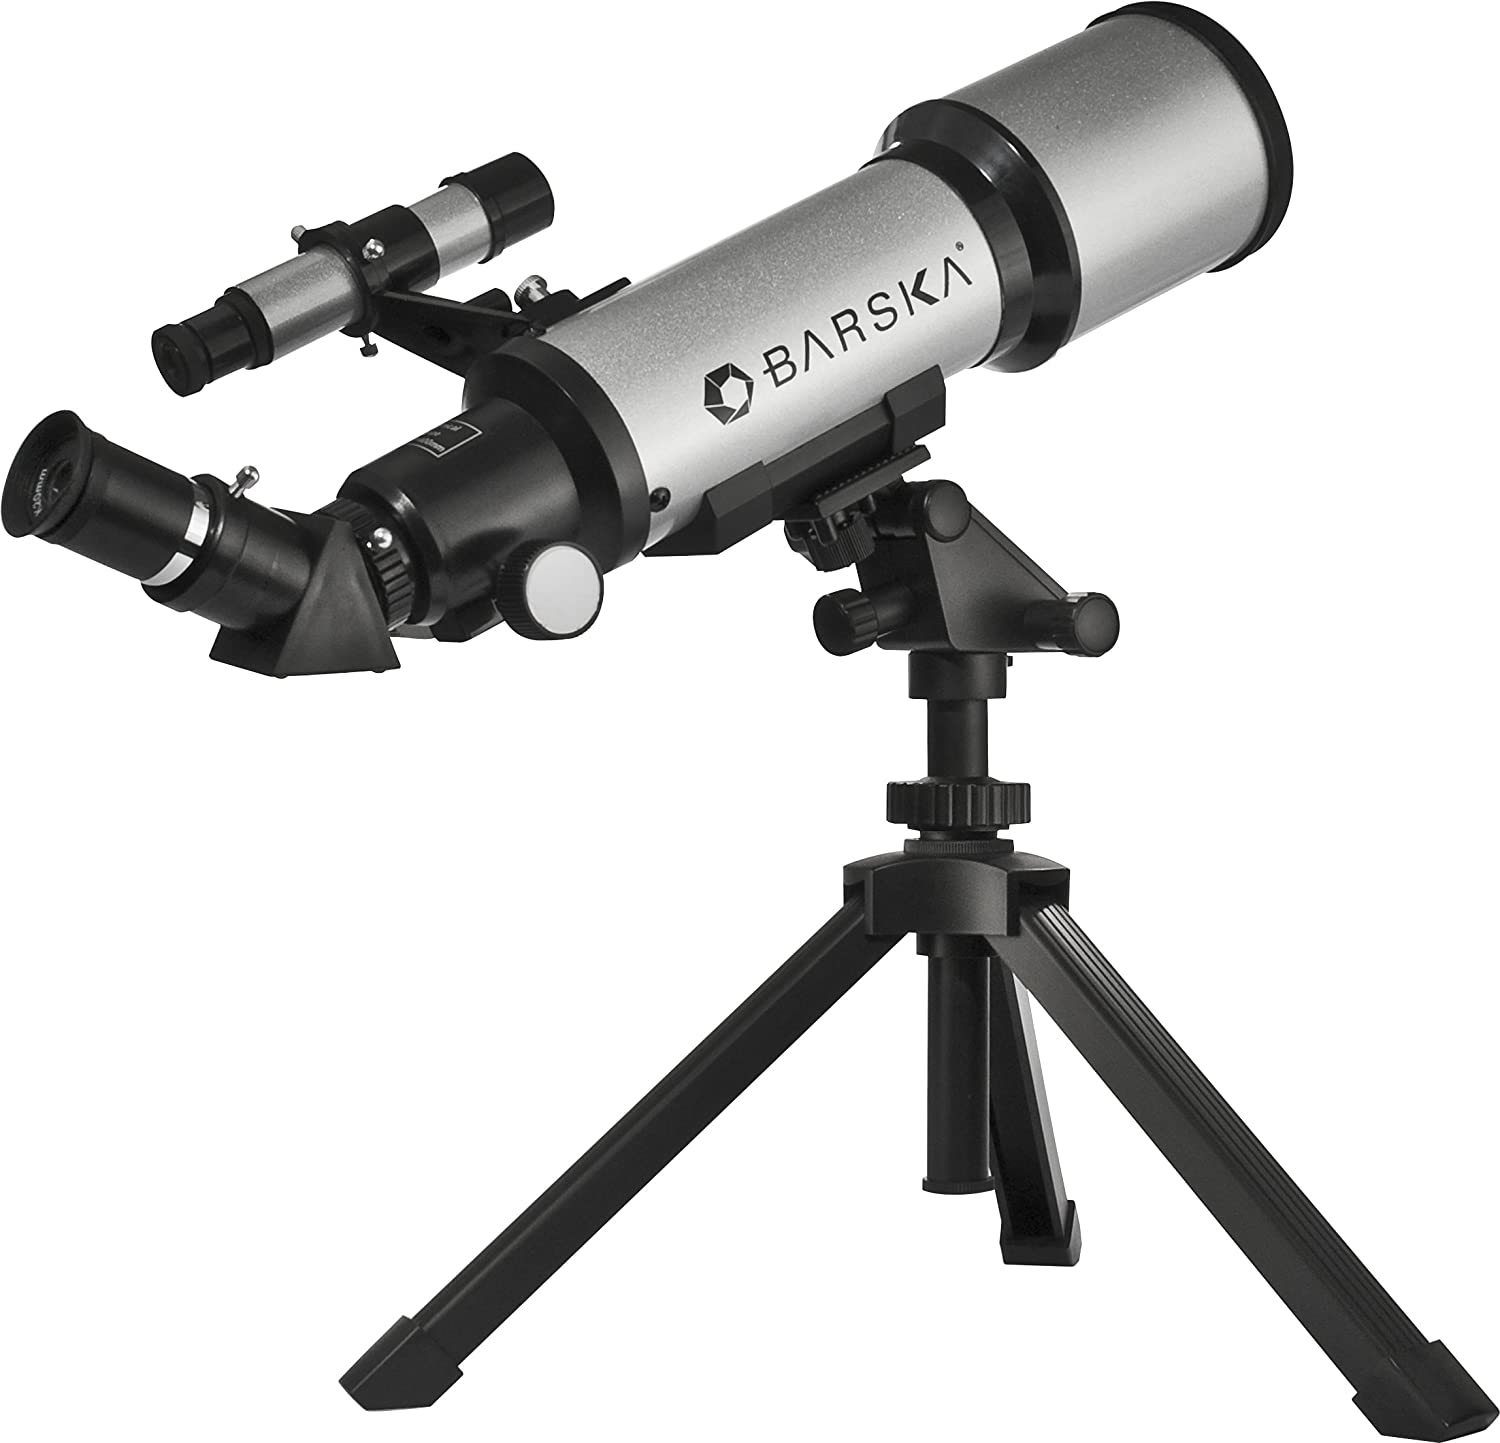 BARSKA Starwatcher 400x70mm Refractor Telescope w/ Tabletop Tripod & Carry Case - $78.99